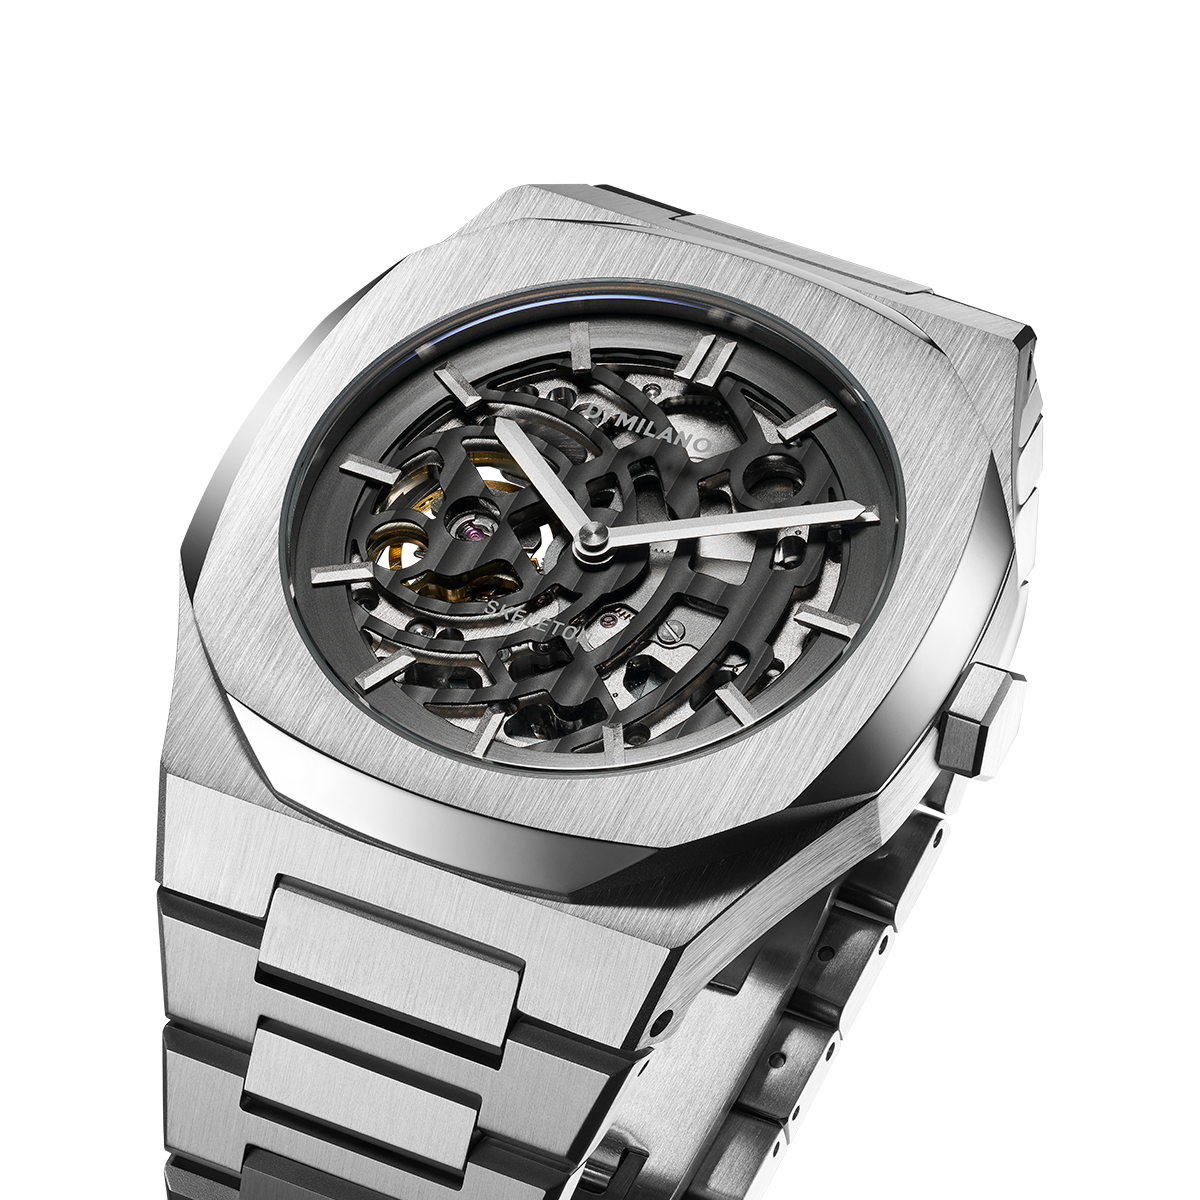 Men's Skeleton Bracelet Silver Watch D1-S-SKBJ01 D1 Milano